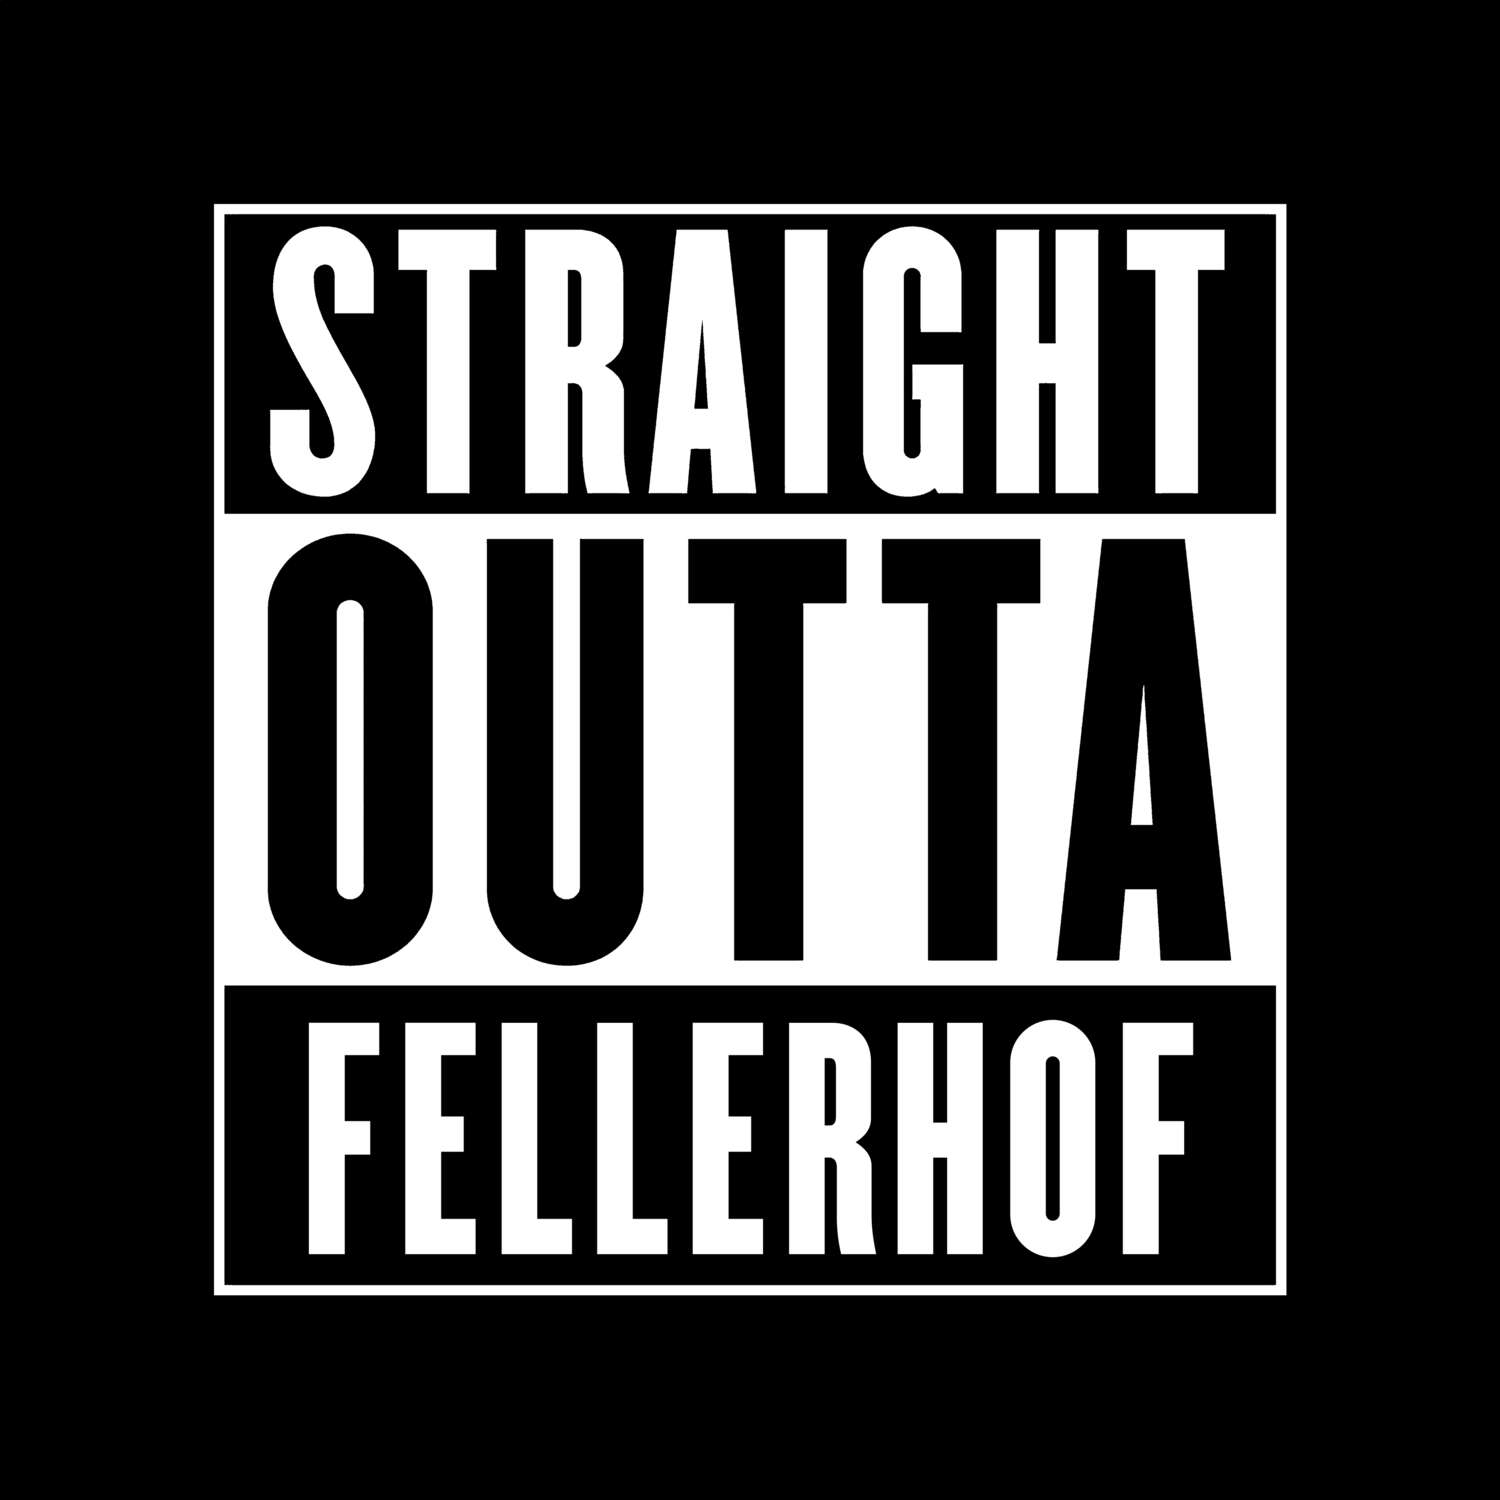 Fellerhof T-Shirt »Straight Outta«